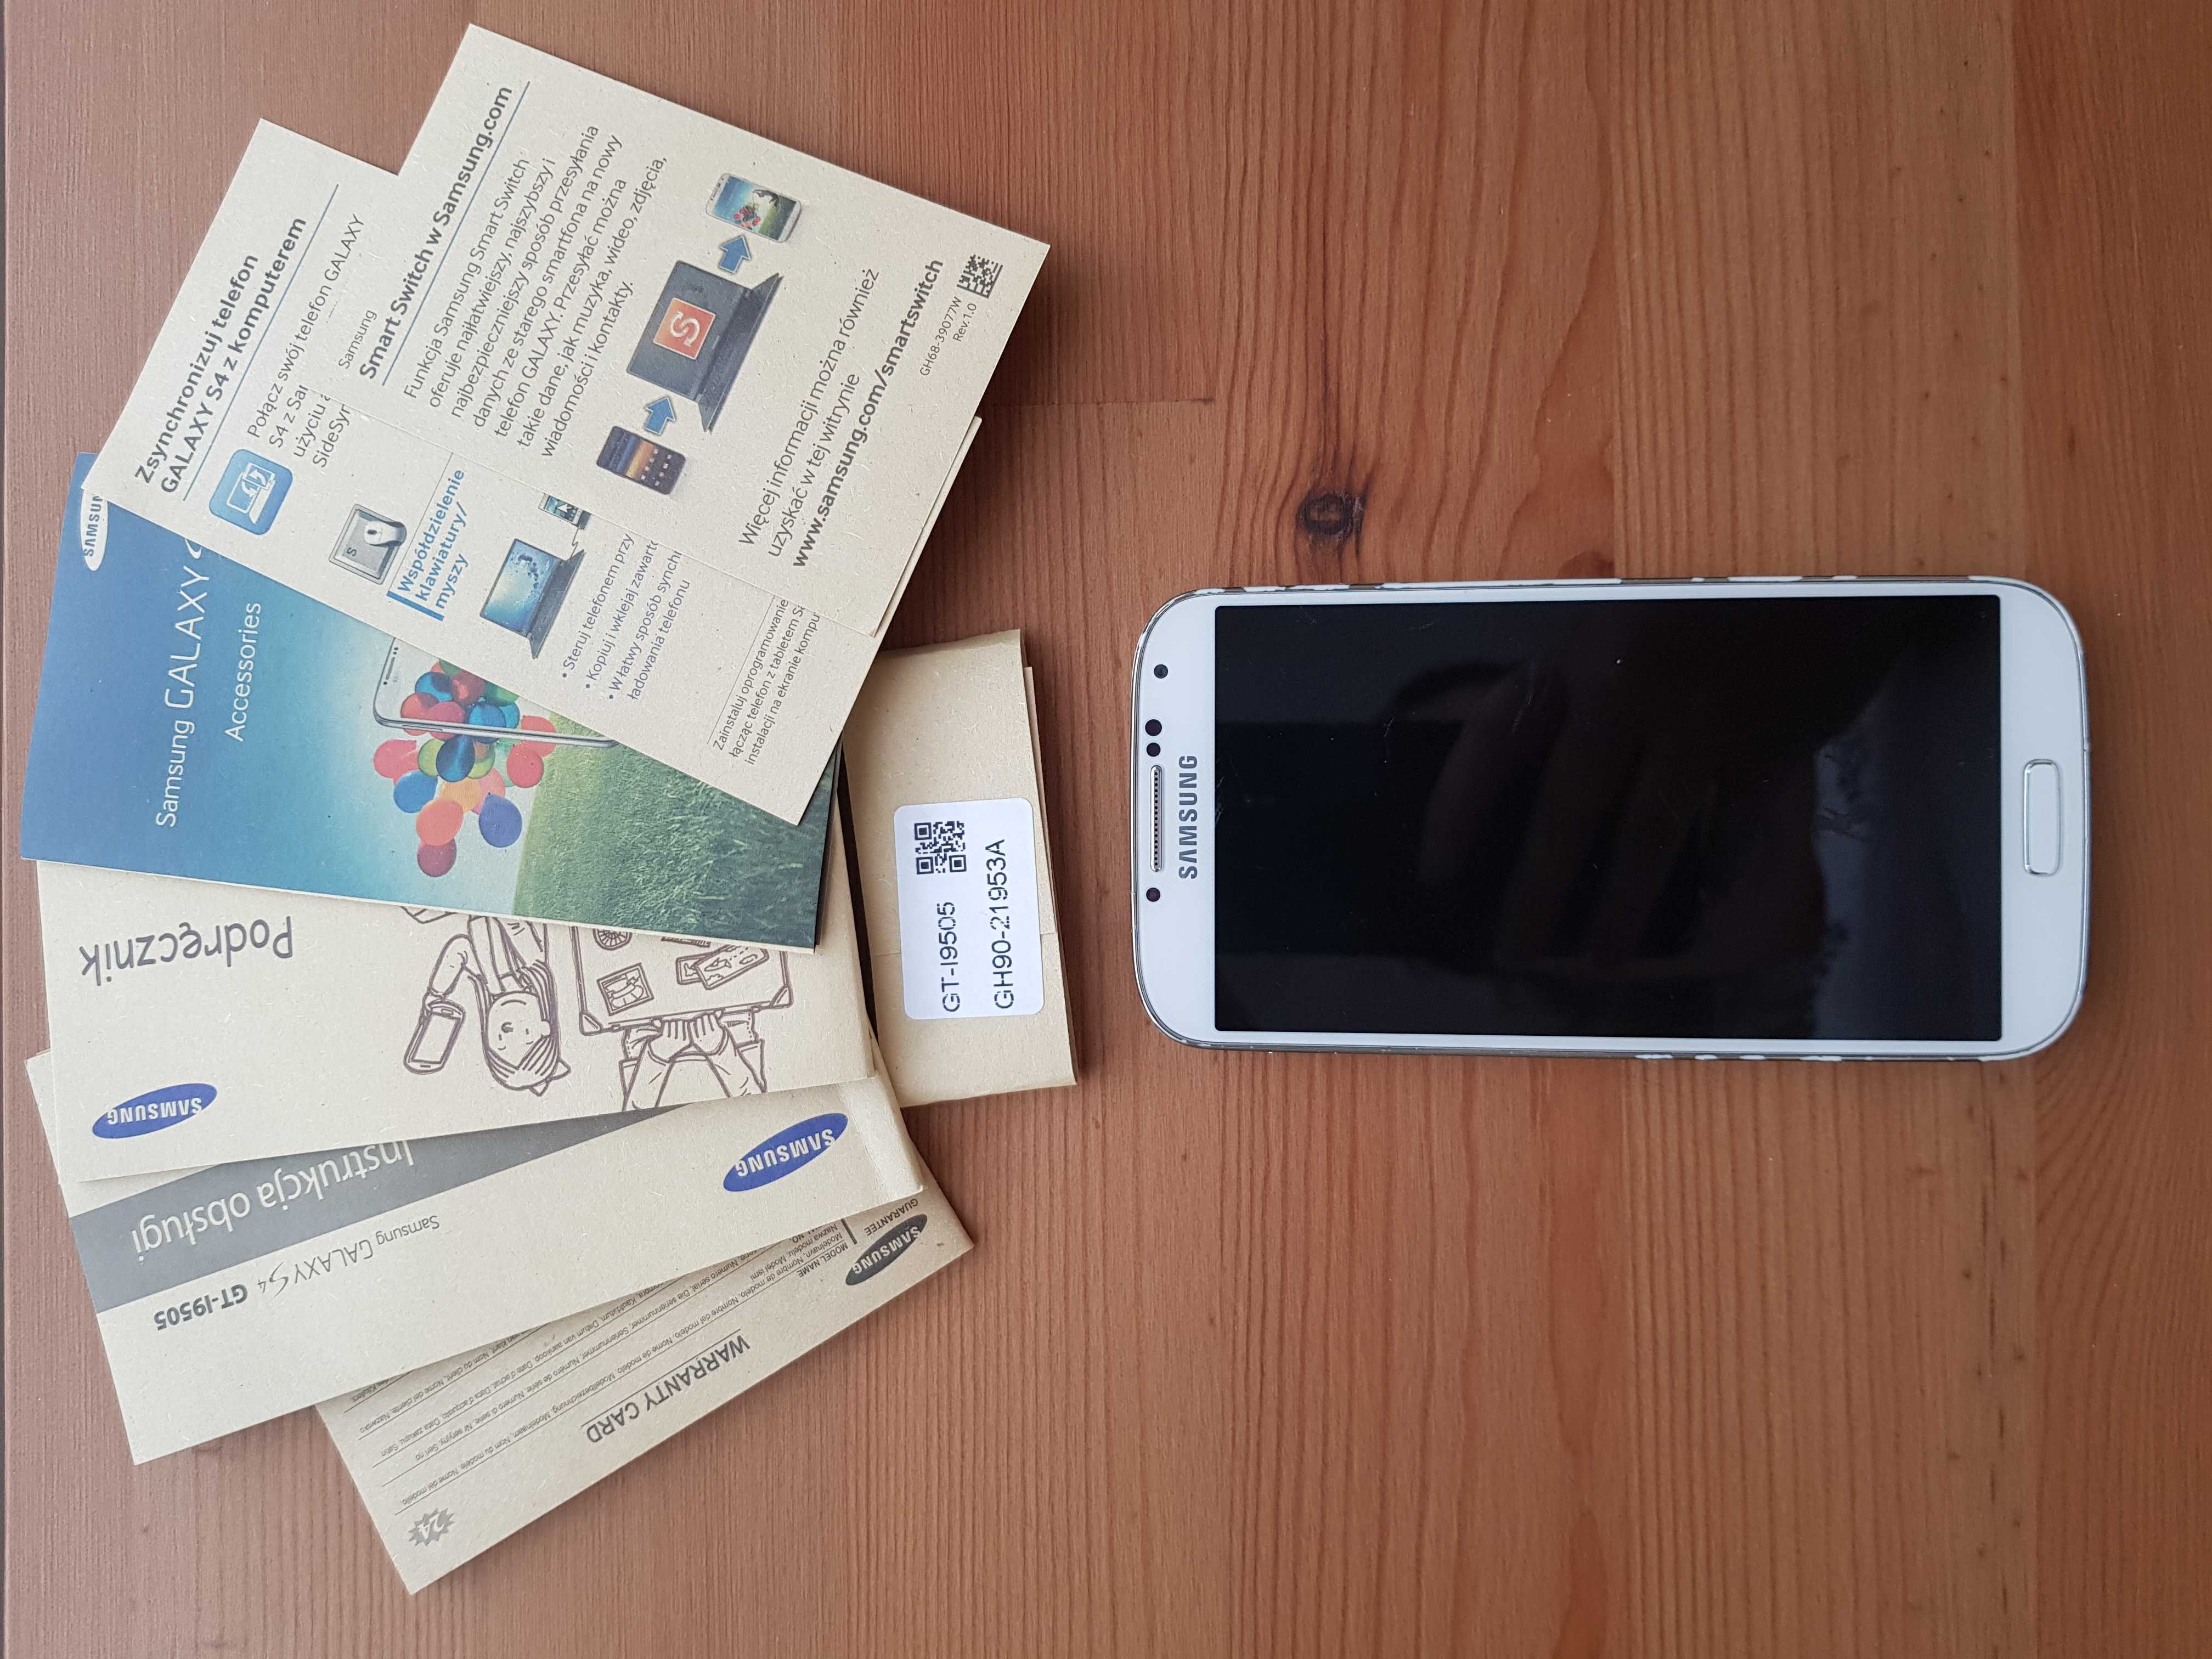 Samsung Galaxy S4 biały 16 GB